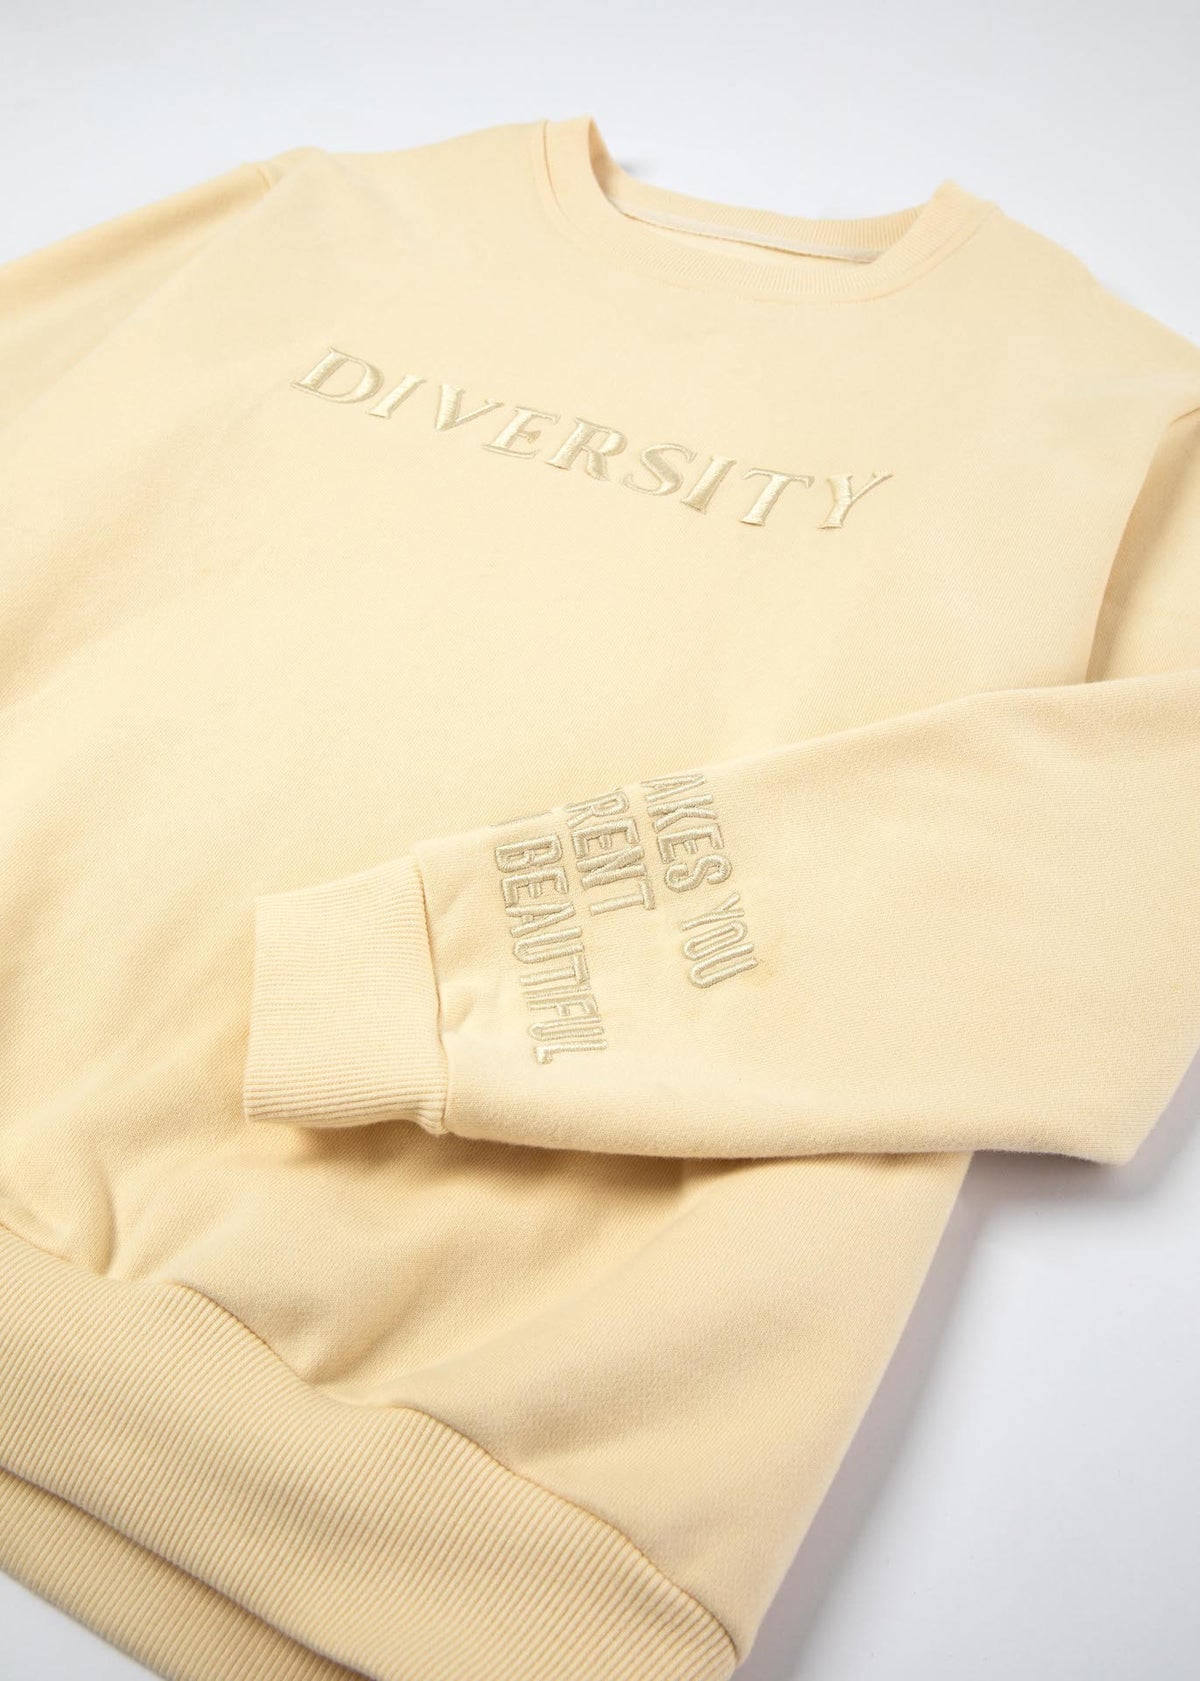 Diversity Embroidered Sweatshirt